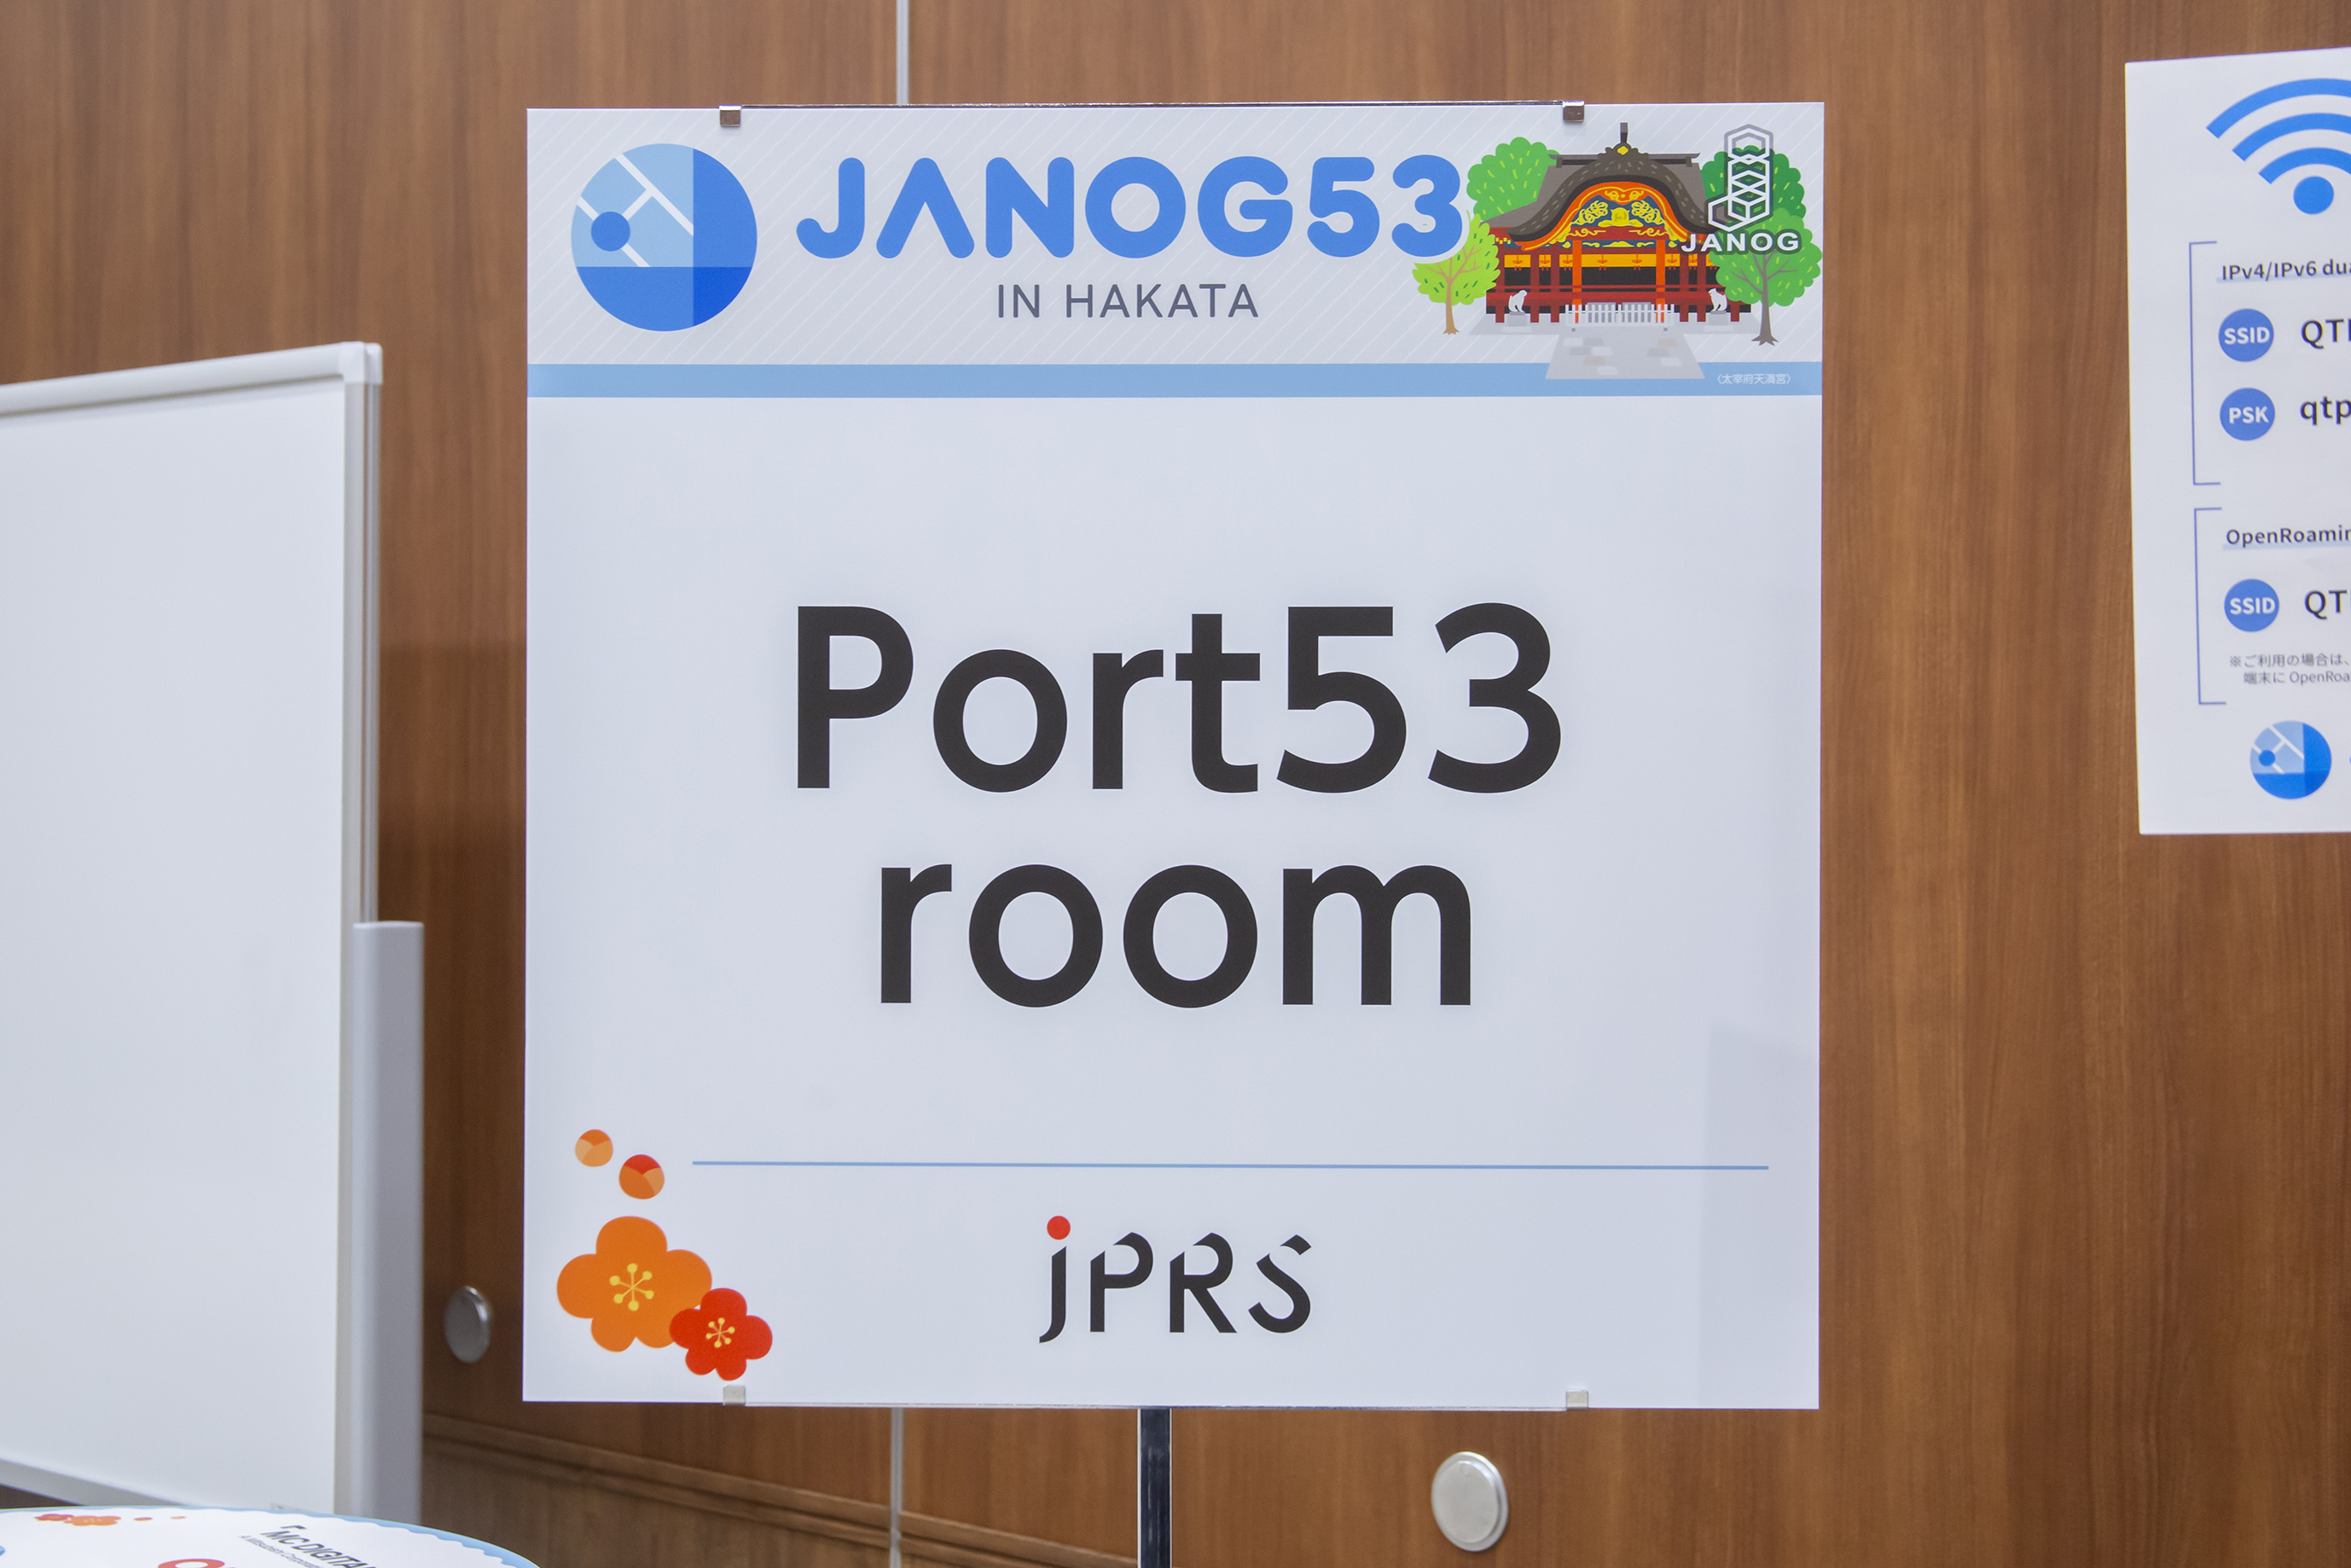 Port53 room